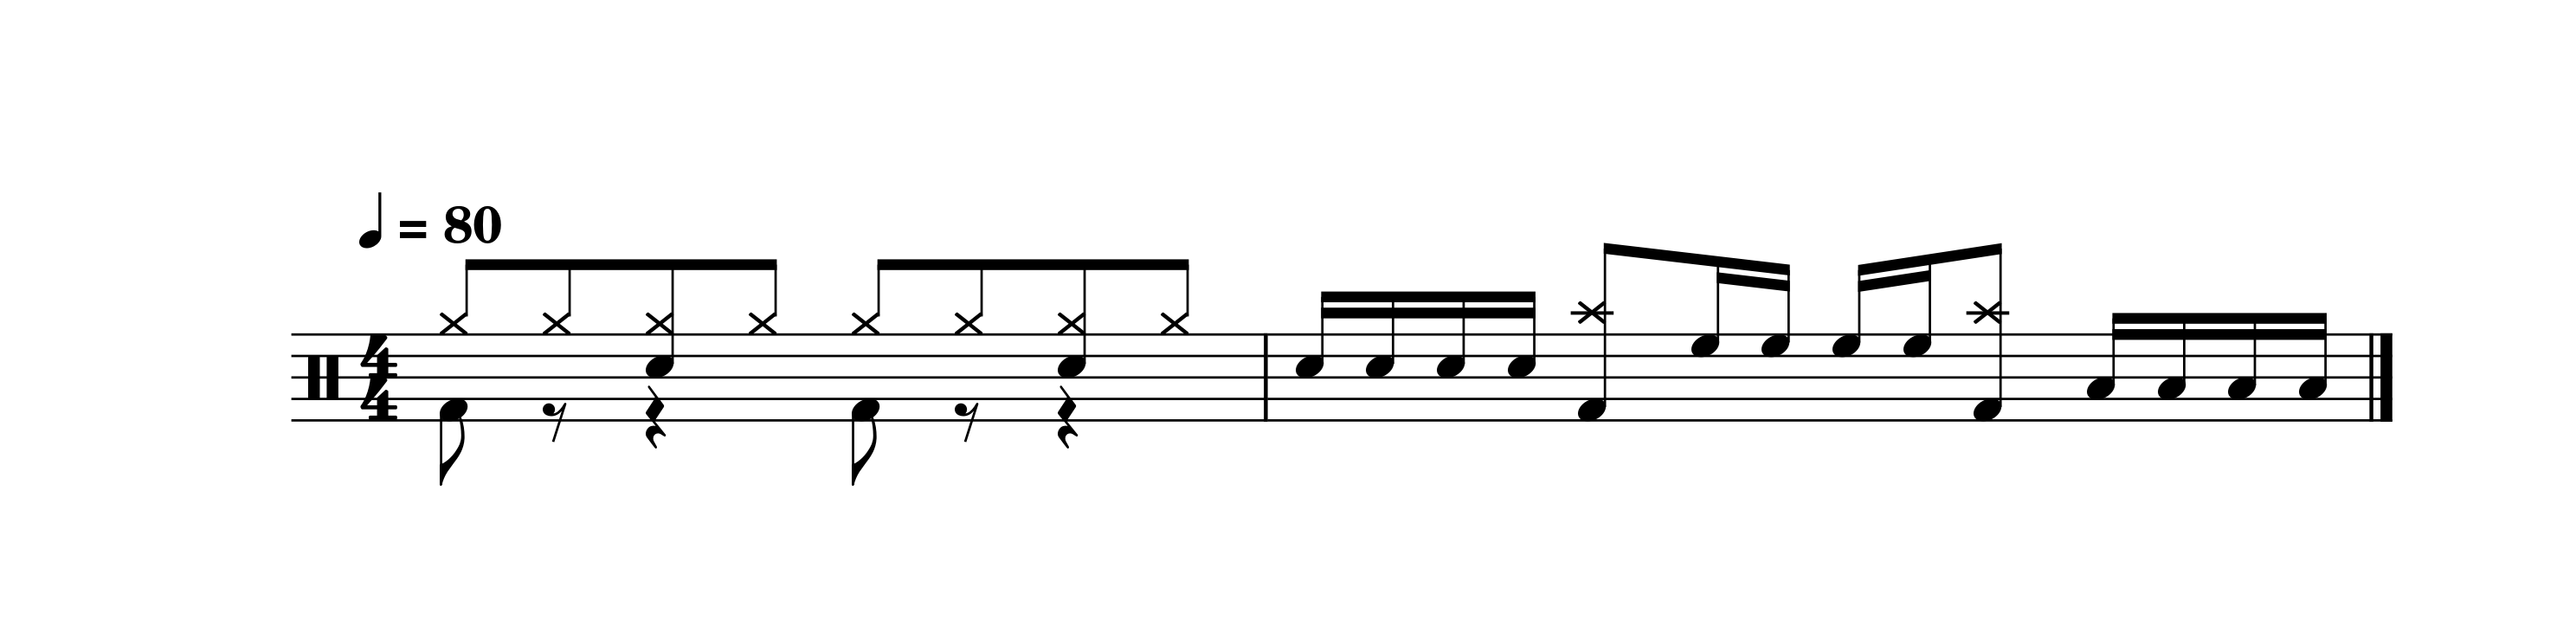 drum fill 8